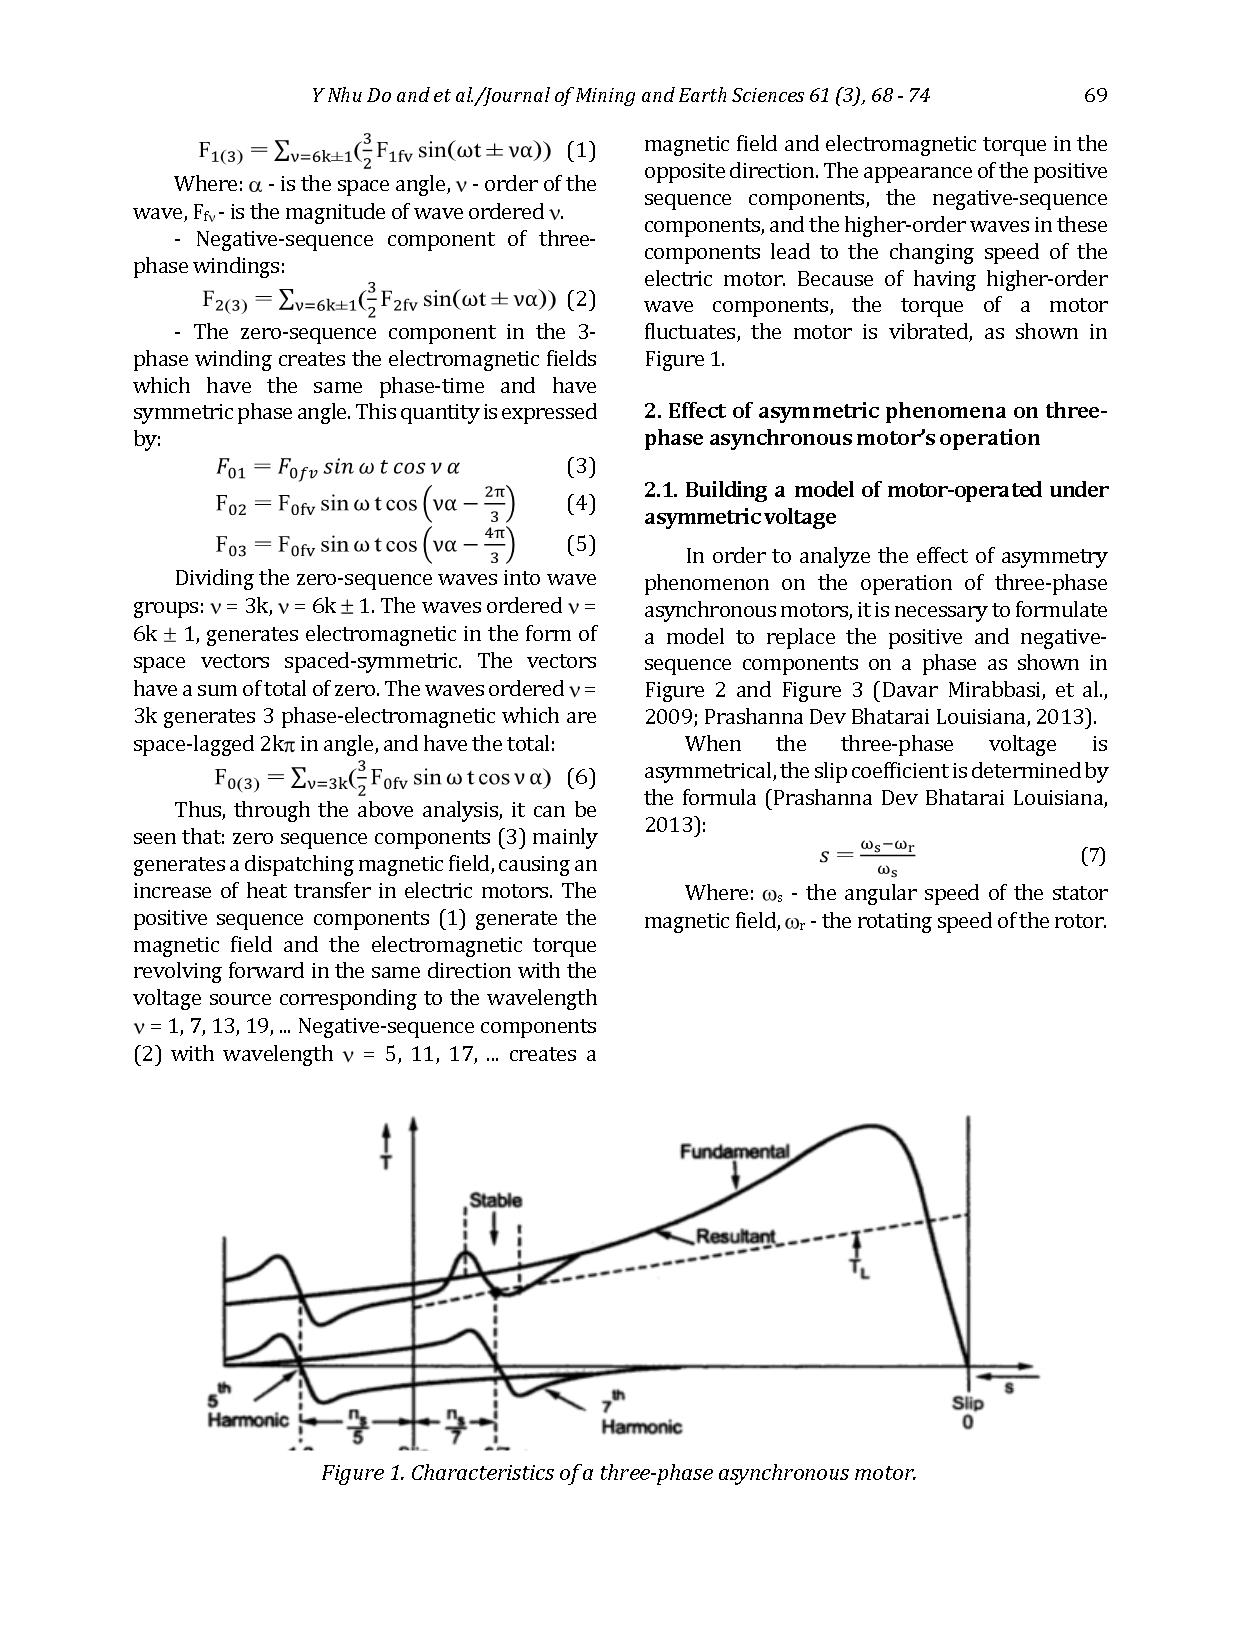 Impact of asymmetrical phenomena on asynchronous three phase motors in operation mode trang 2